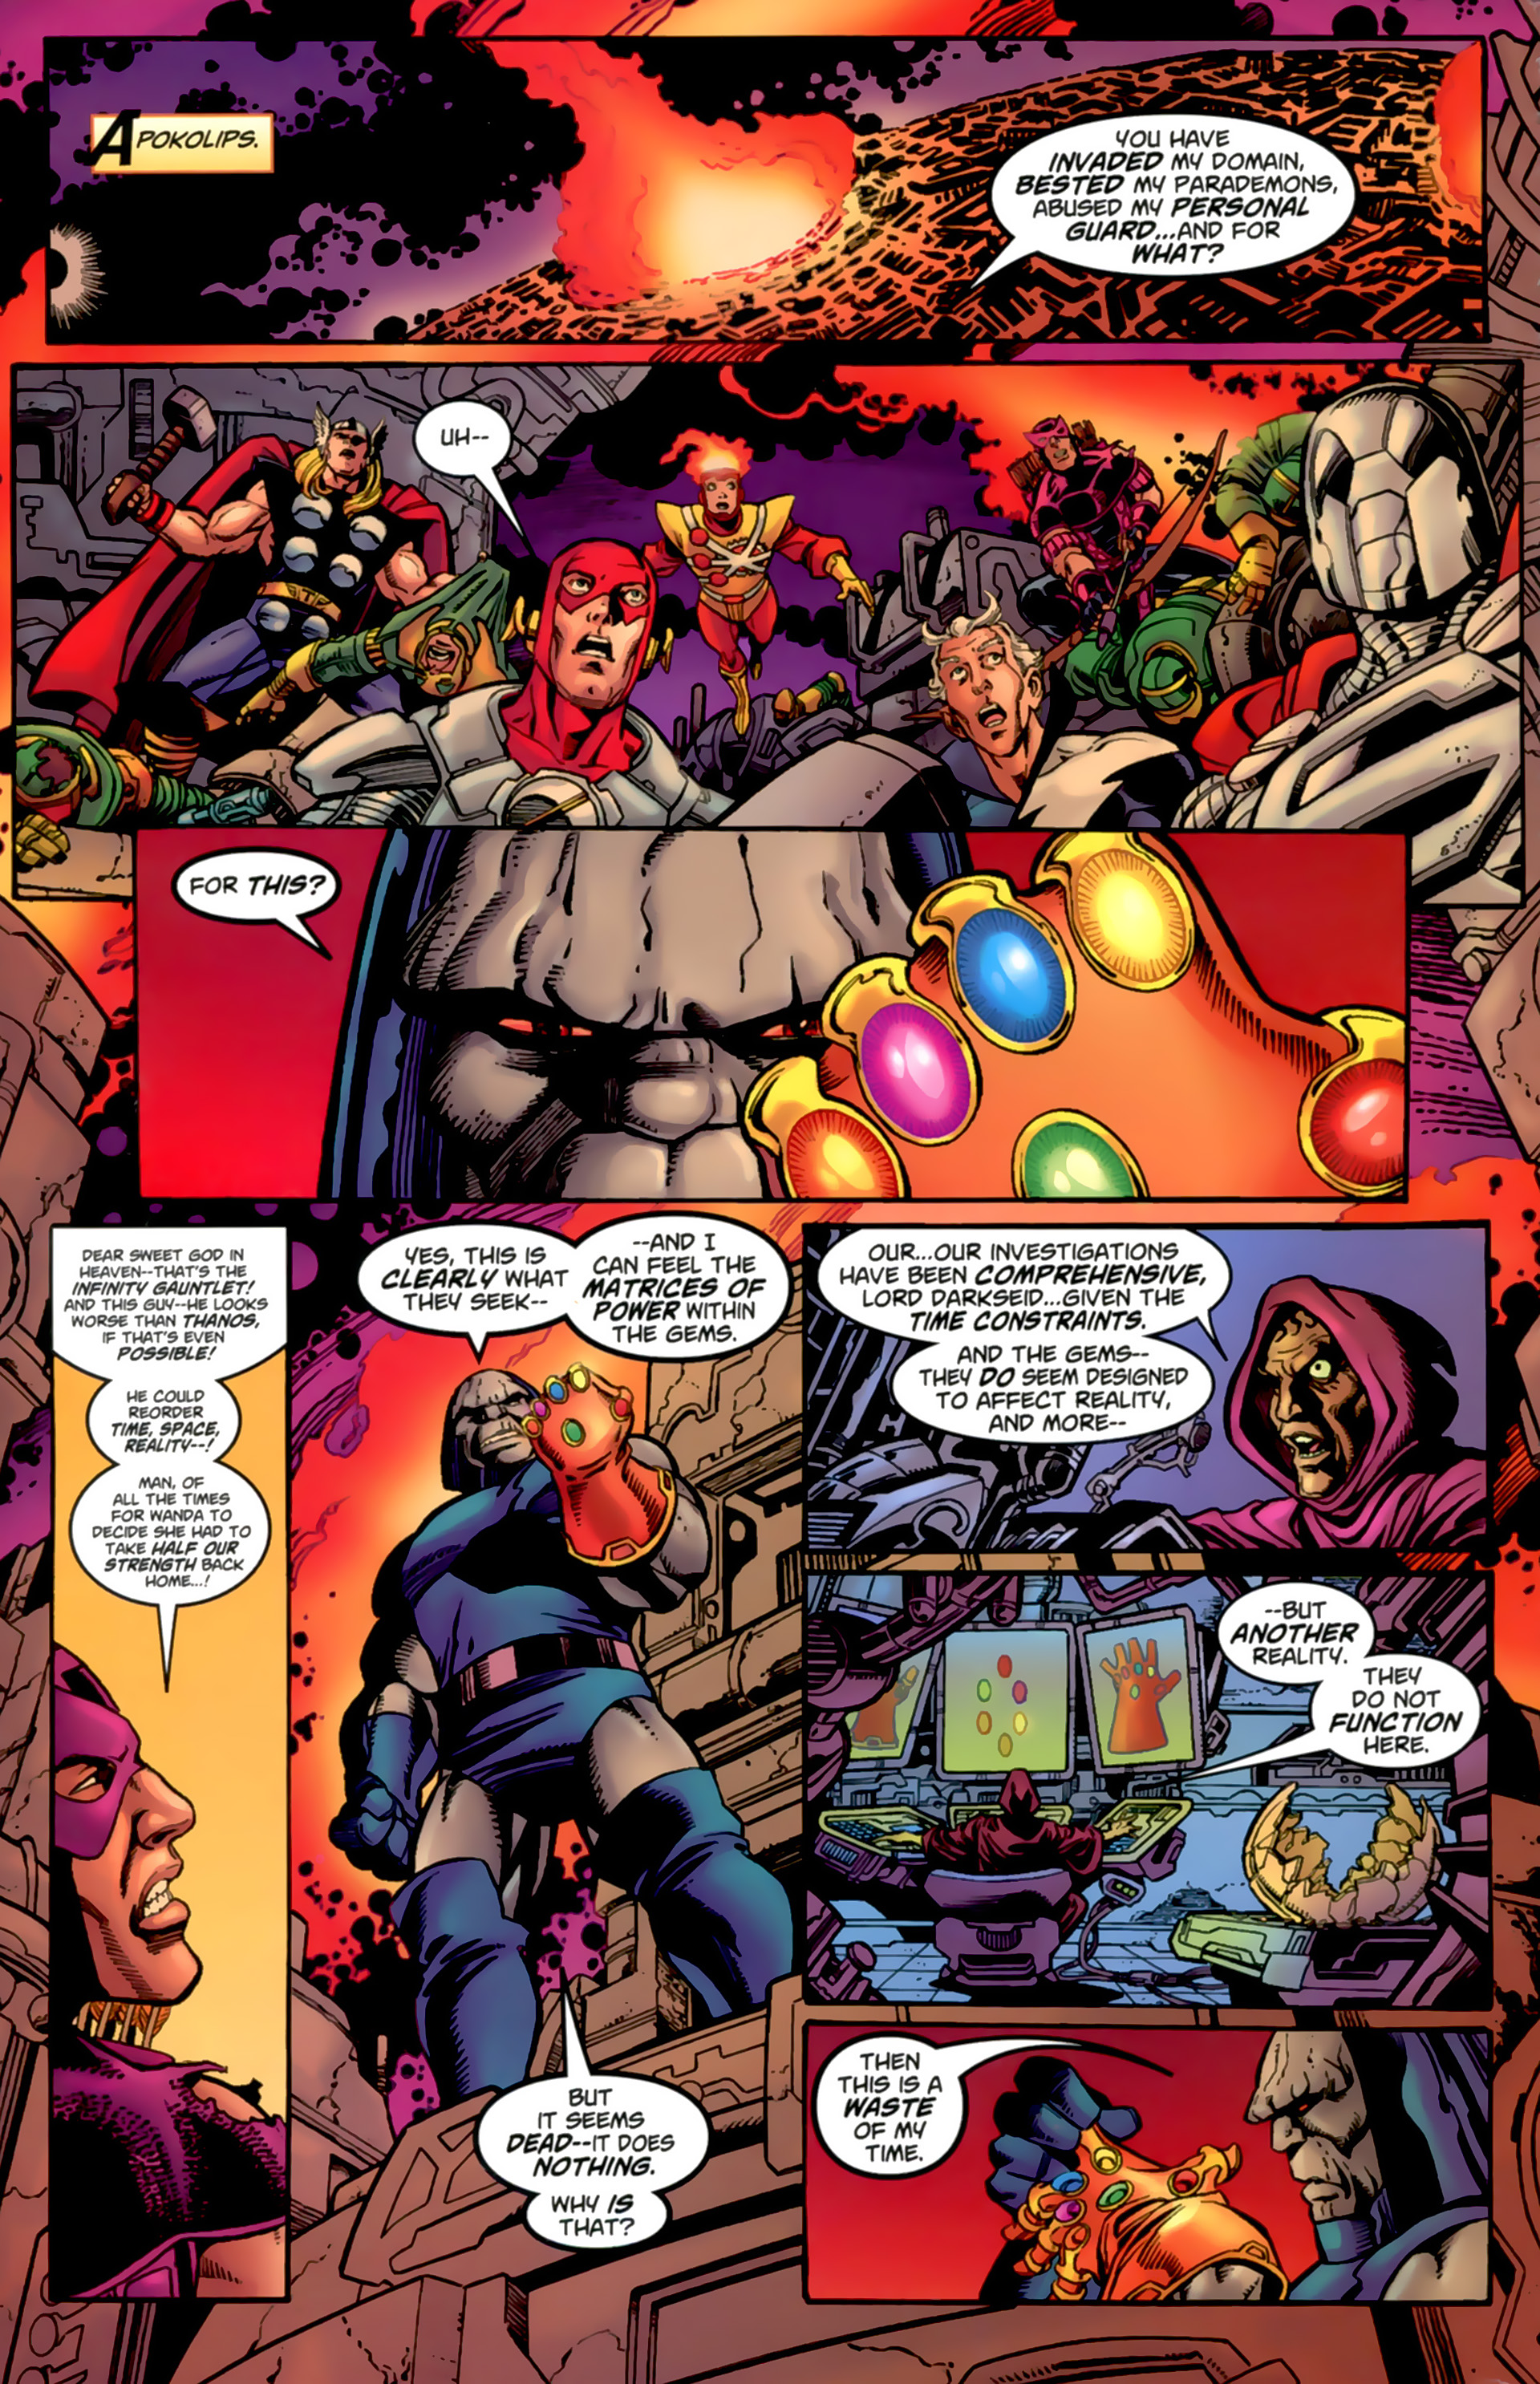 Read online JLA/Avengers comic - Issue #2 - 31.